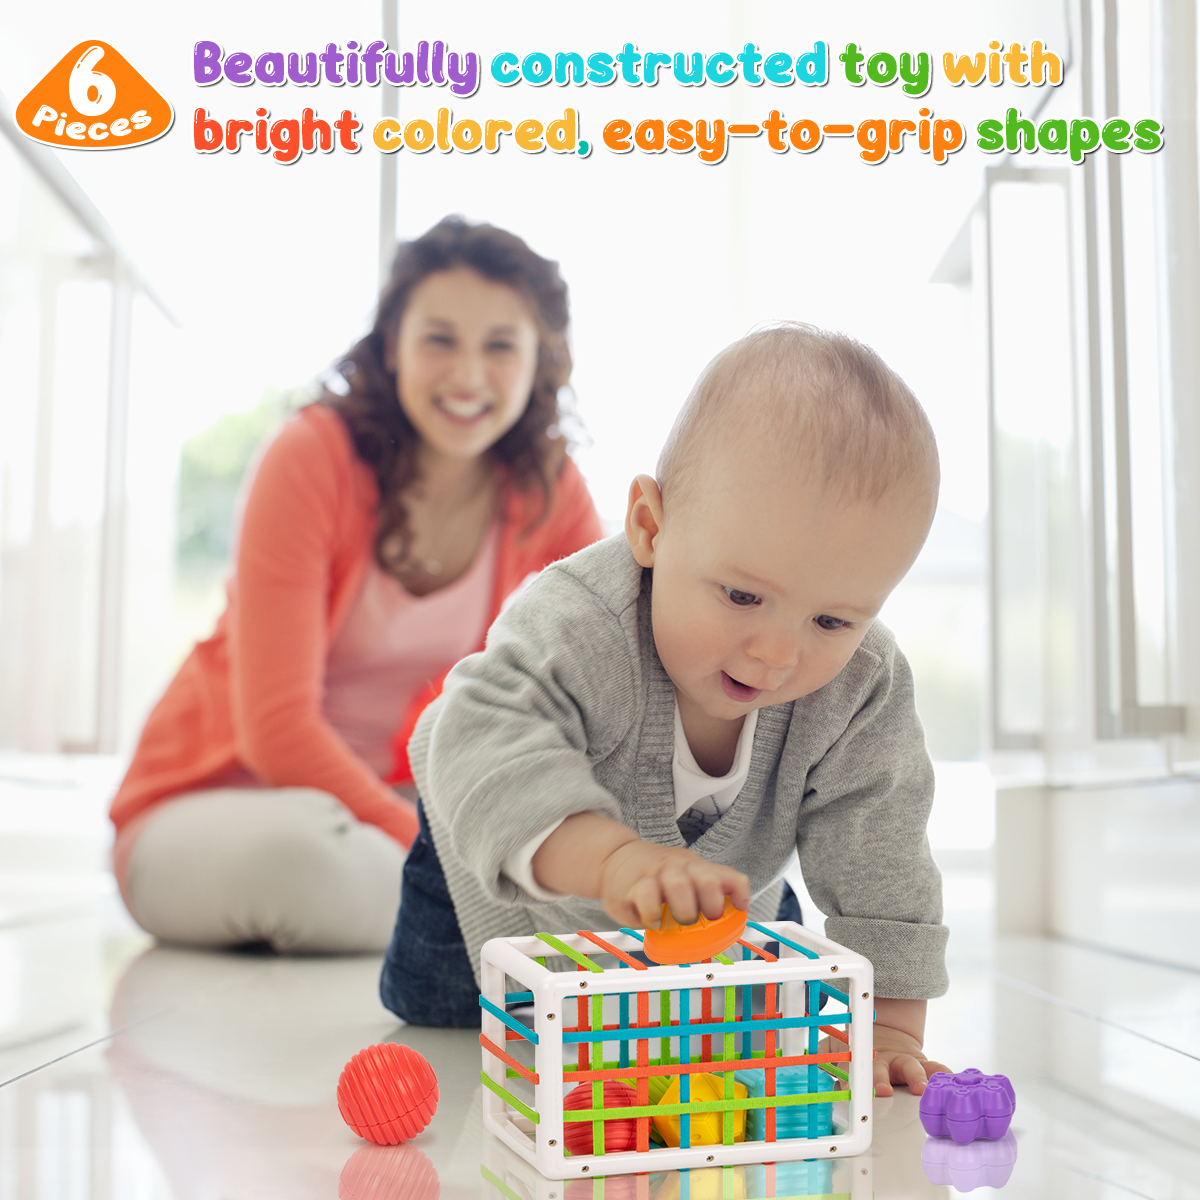 UNIH 嬰兒感官箱，嬰兒形狀分類玩具套裝，幼兒玩具，適合 1 歲男孩女孩禮物